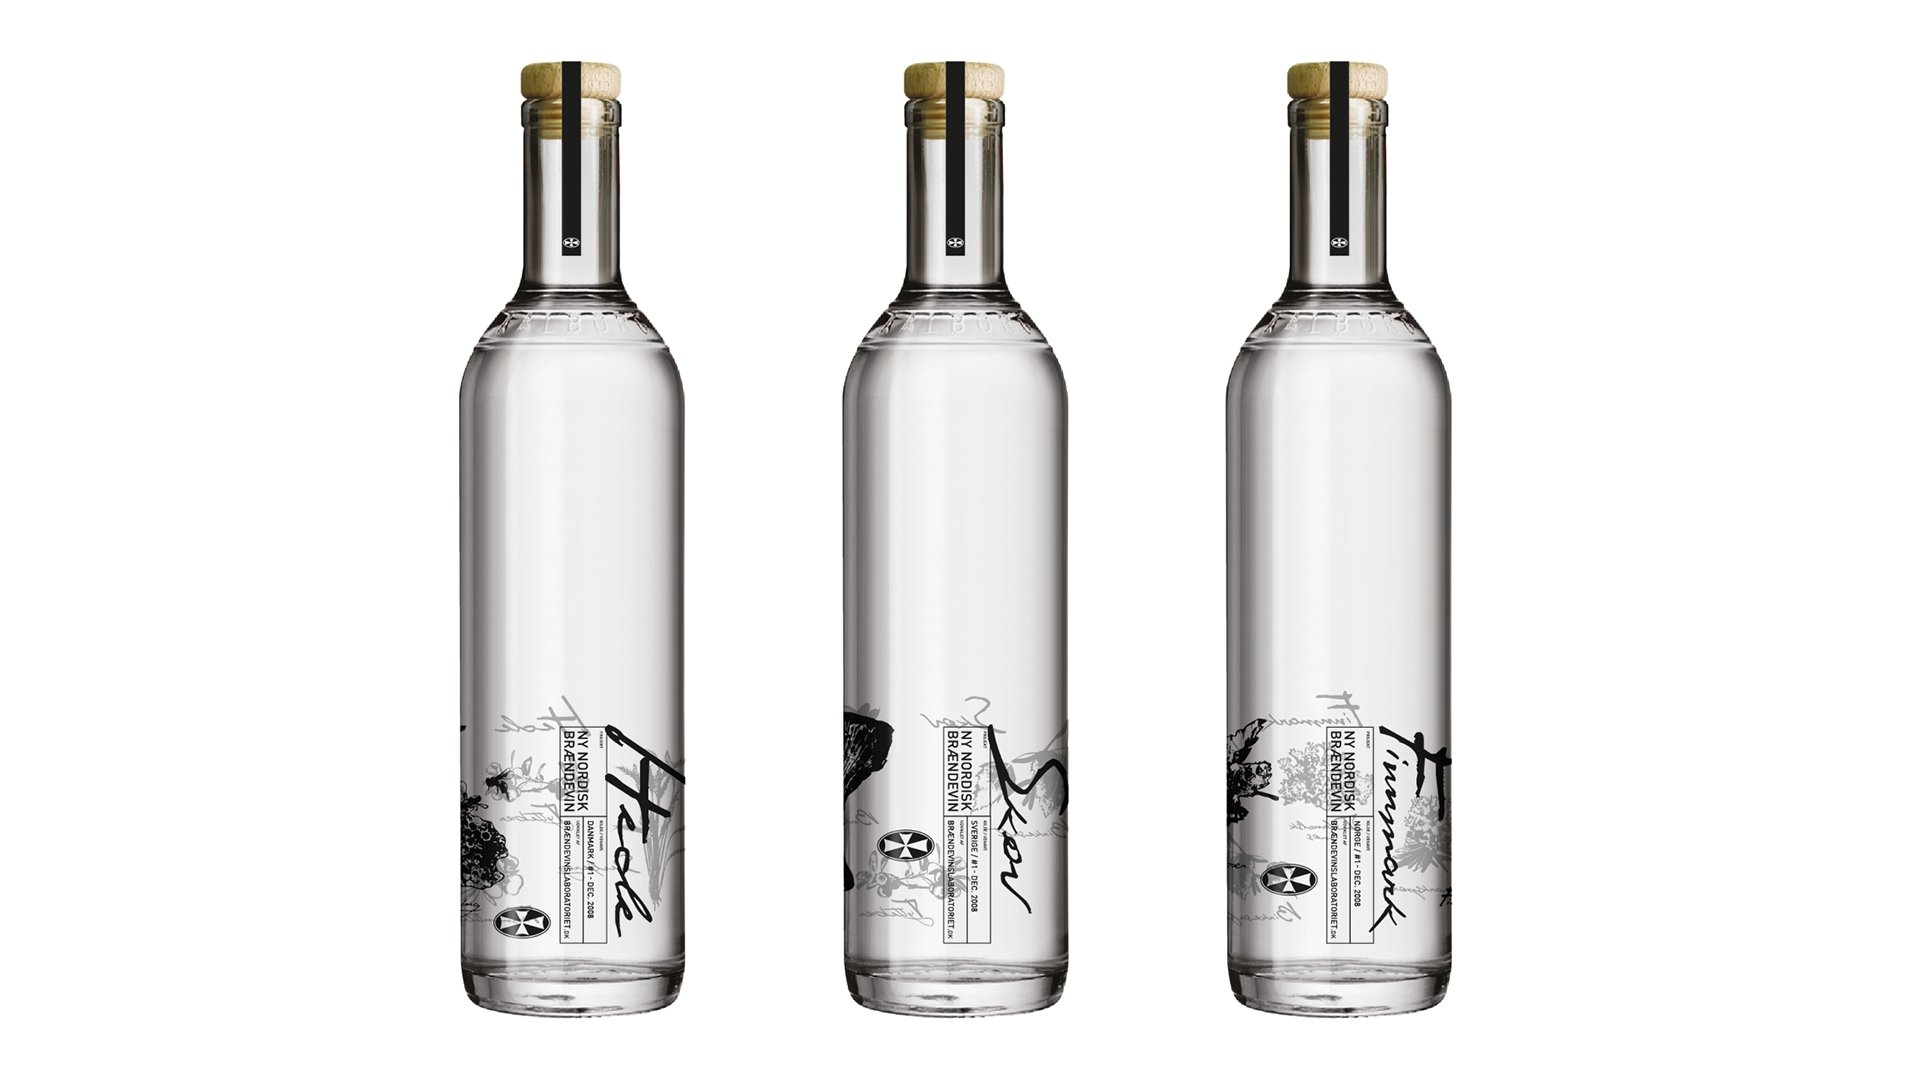 Pernod Ricard Nordic label design to brændevin by LOOP Associates